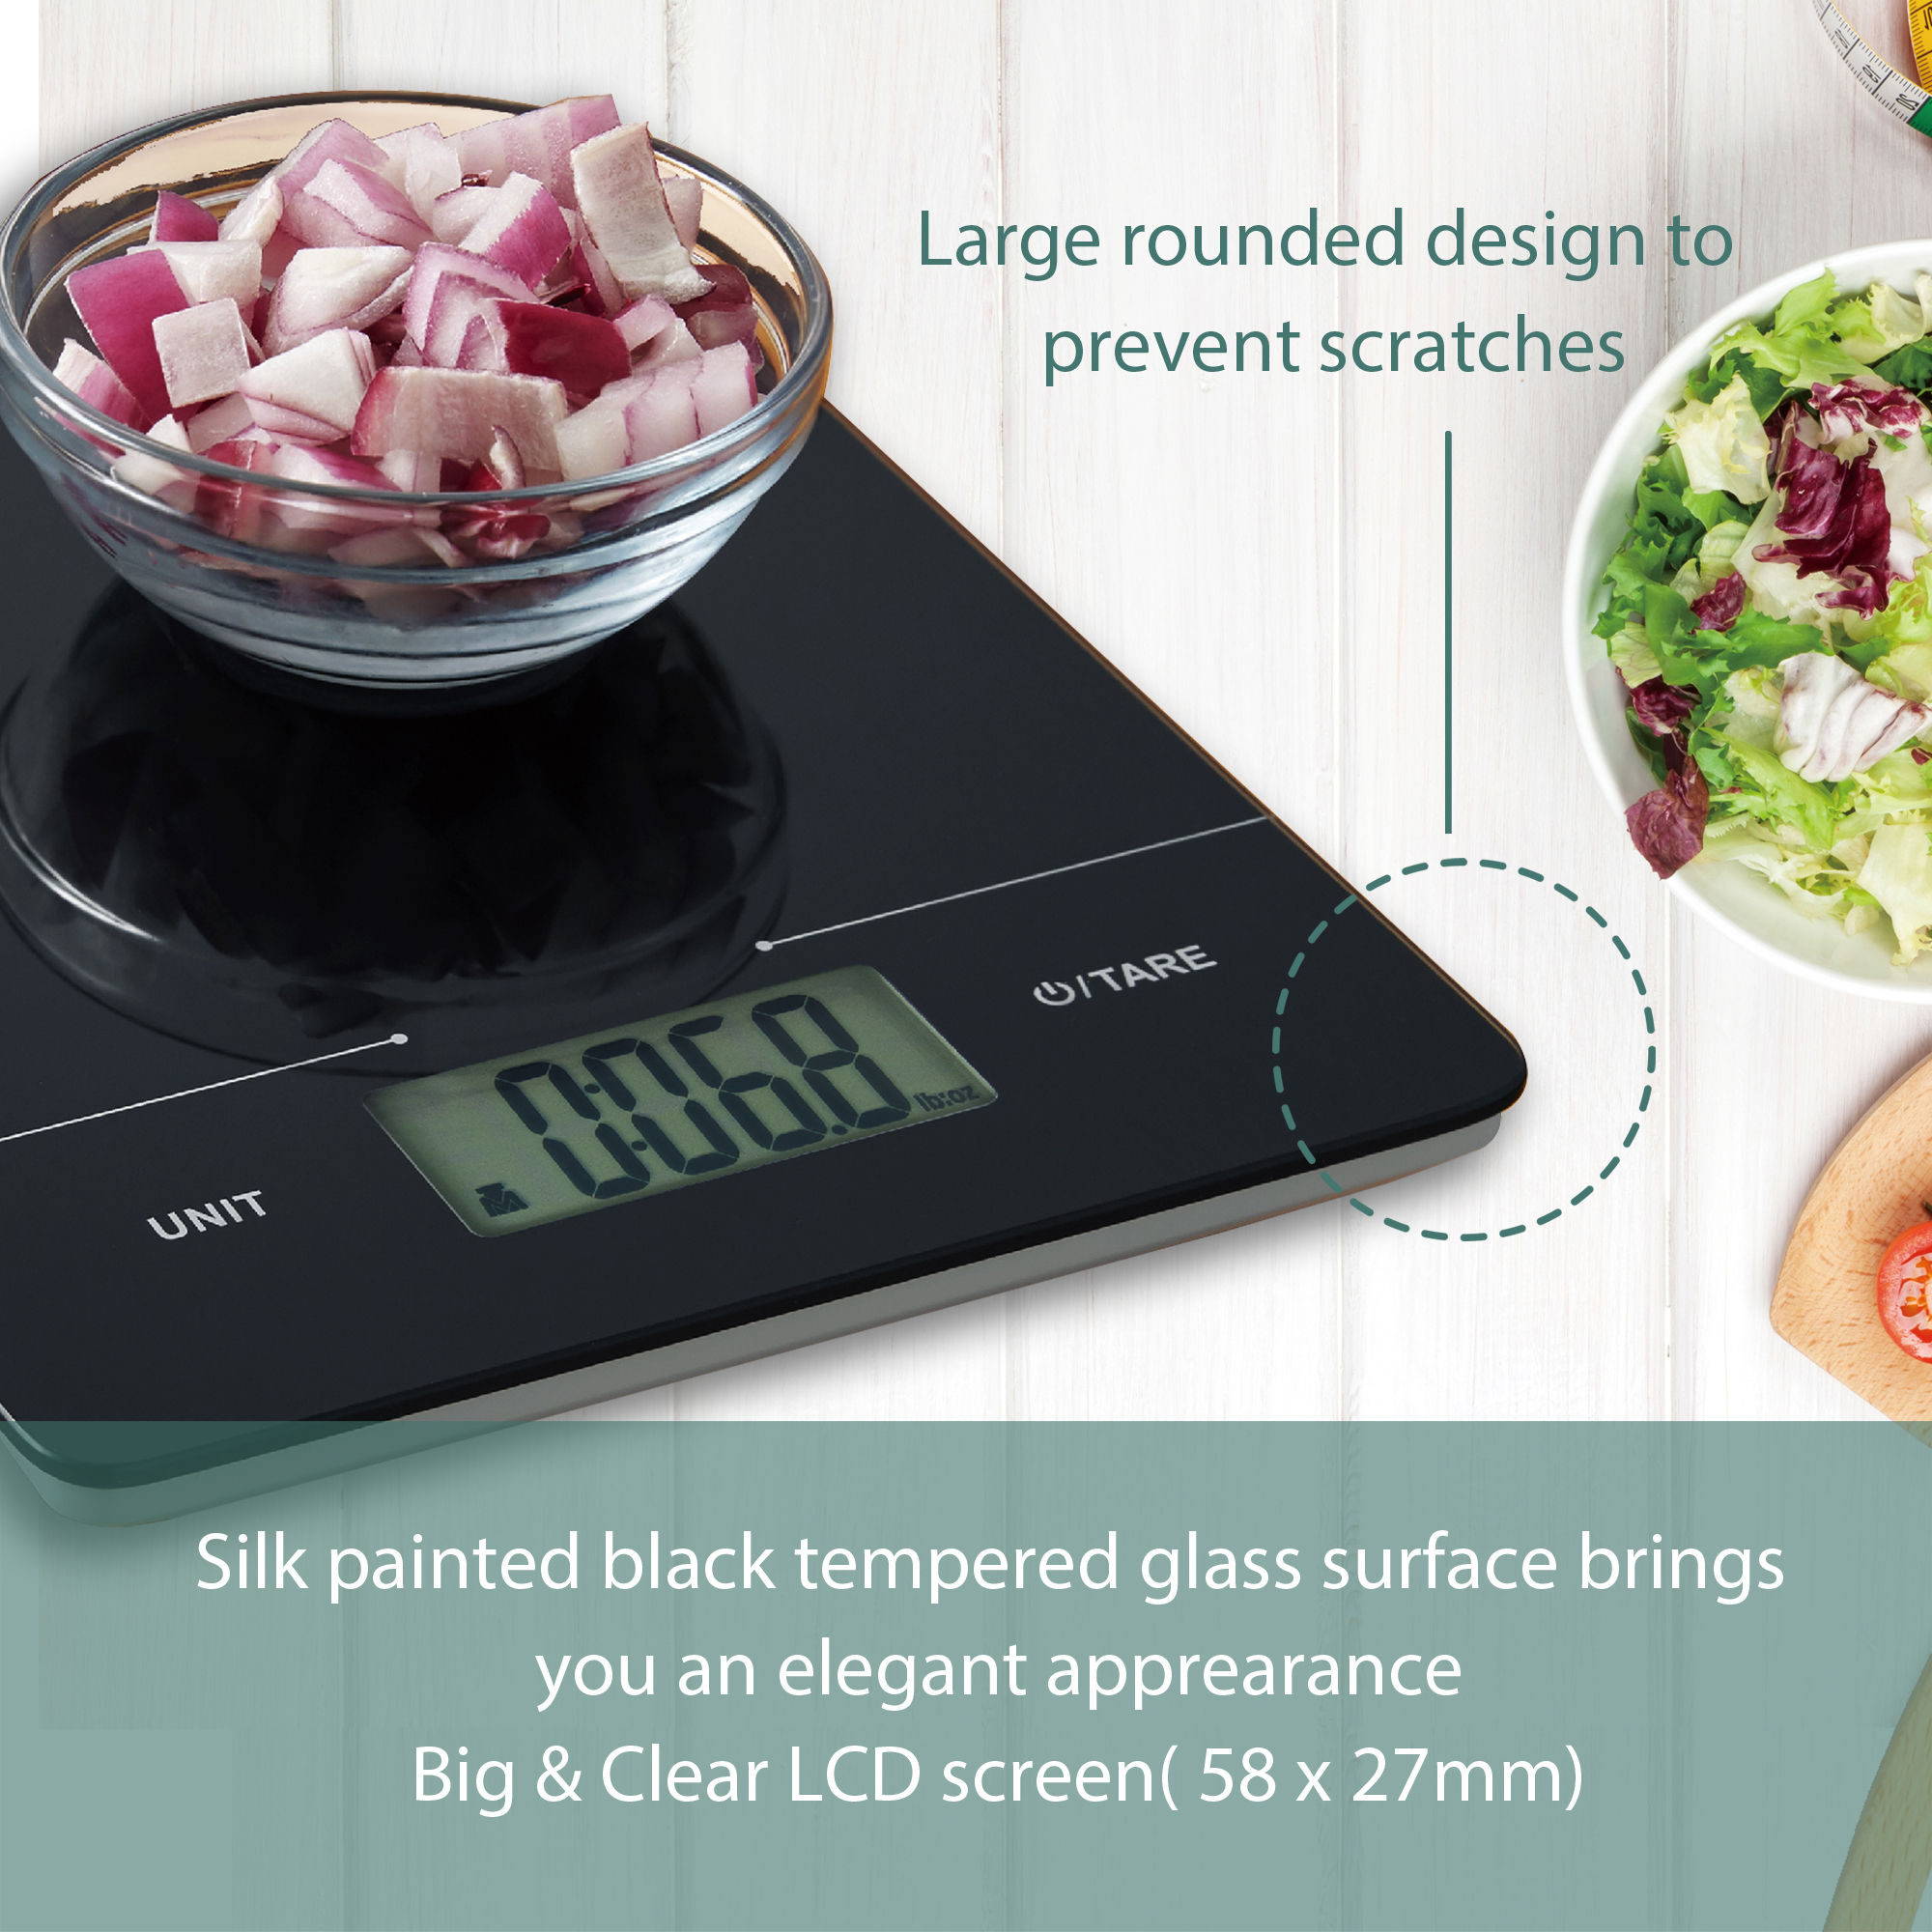 Mainstays Tempered Glass Slimline Digital Scale, Black - image 5 of 11